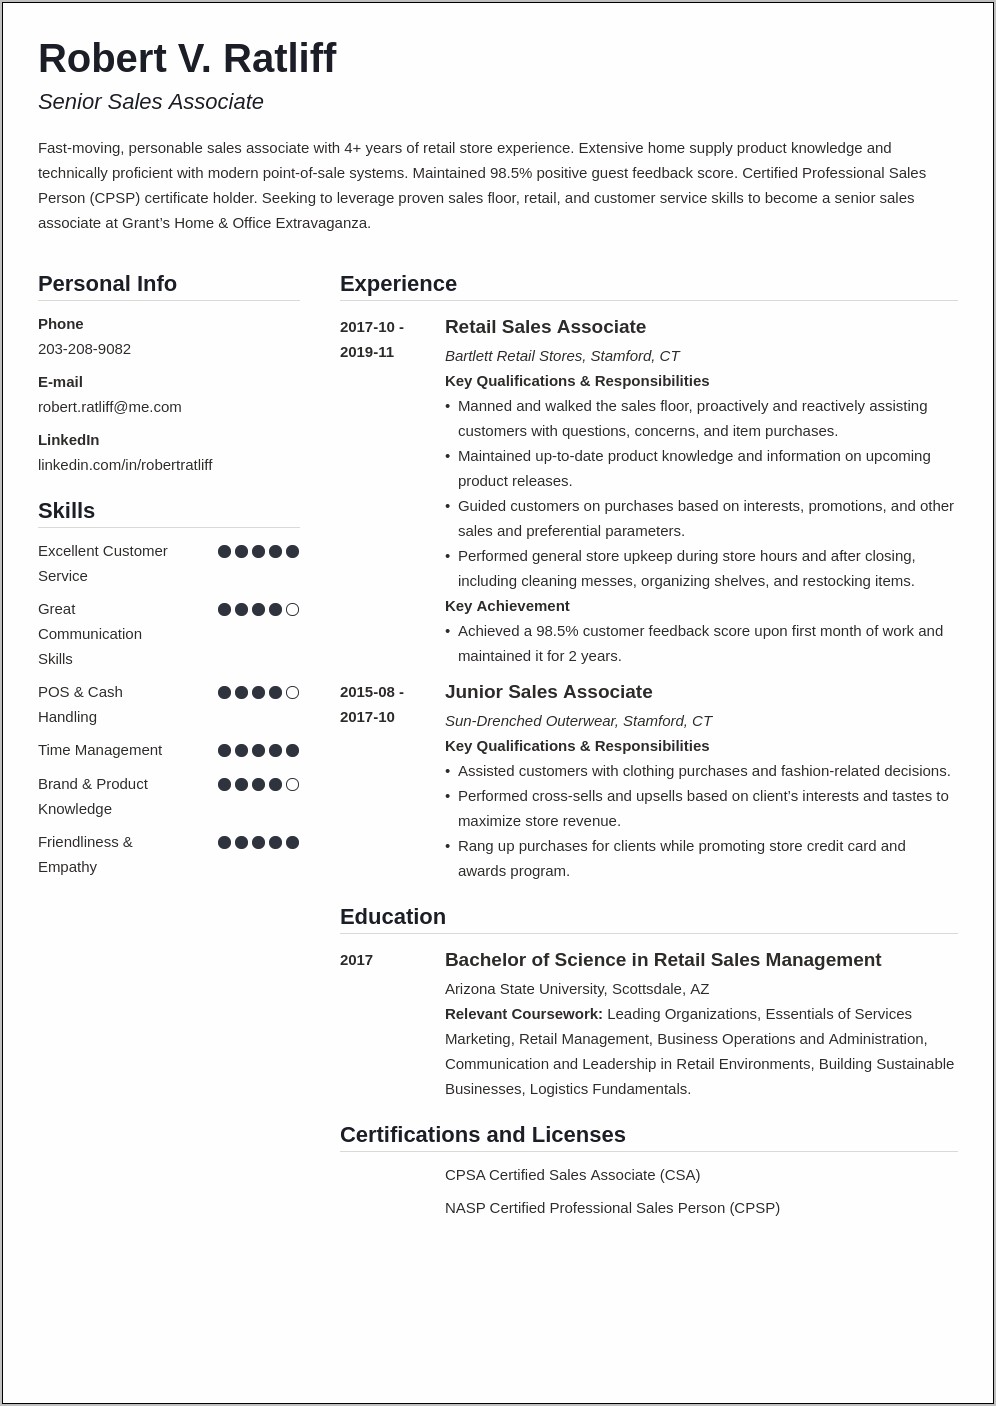 Walmart Stocker Job Description Resume